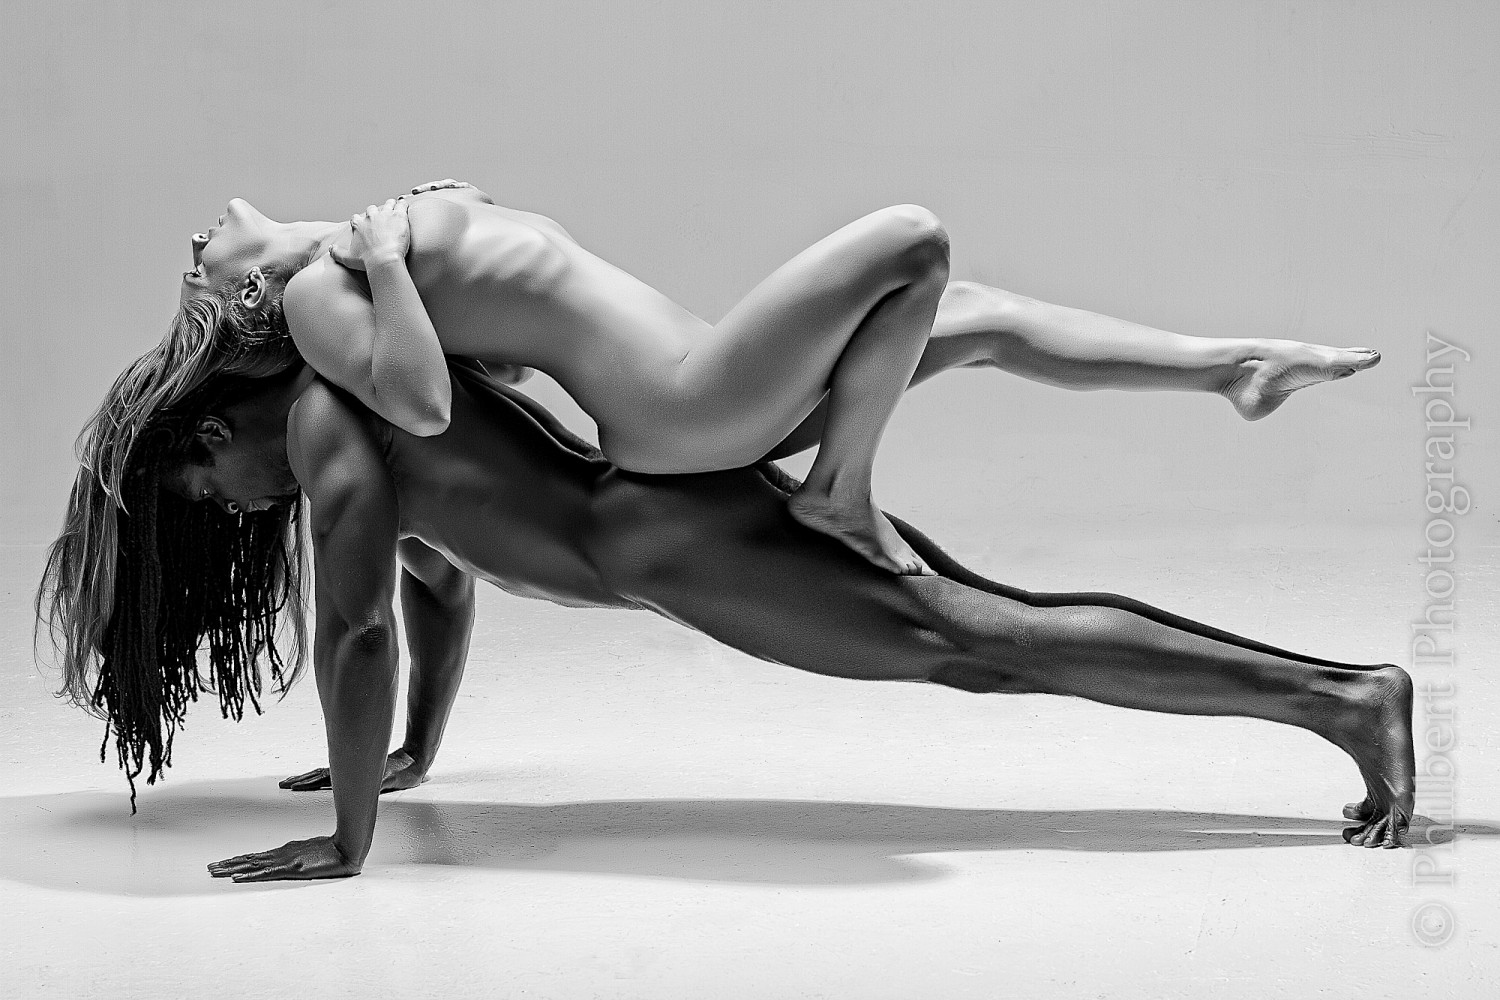 40+ Fine Art Nude Photos that Celebrate All Body Types (NSFW) .